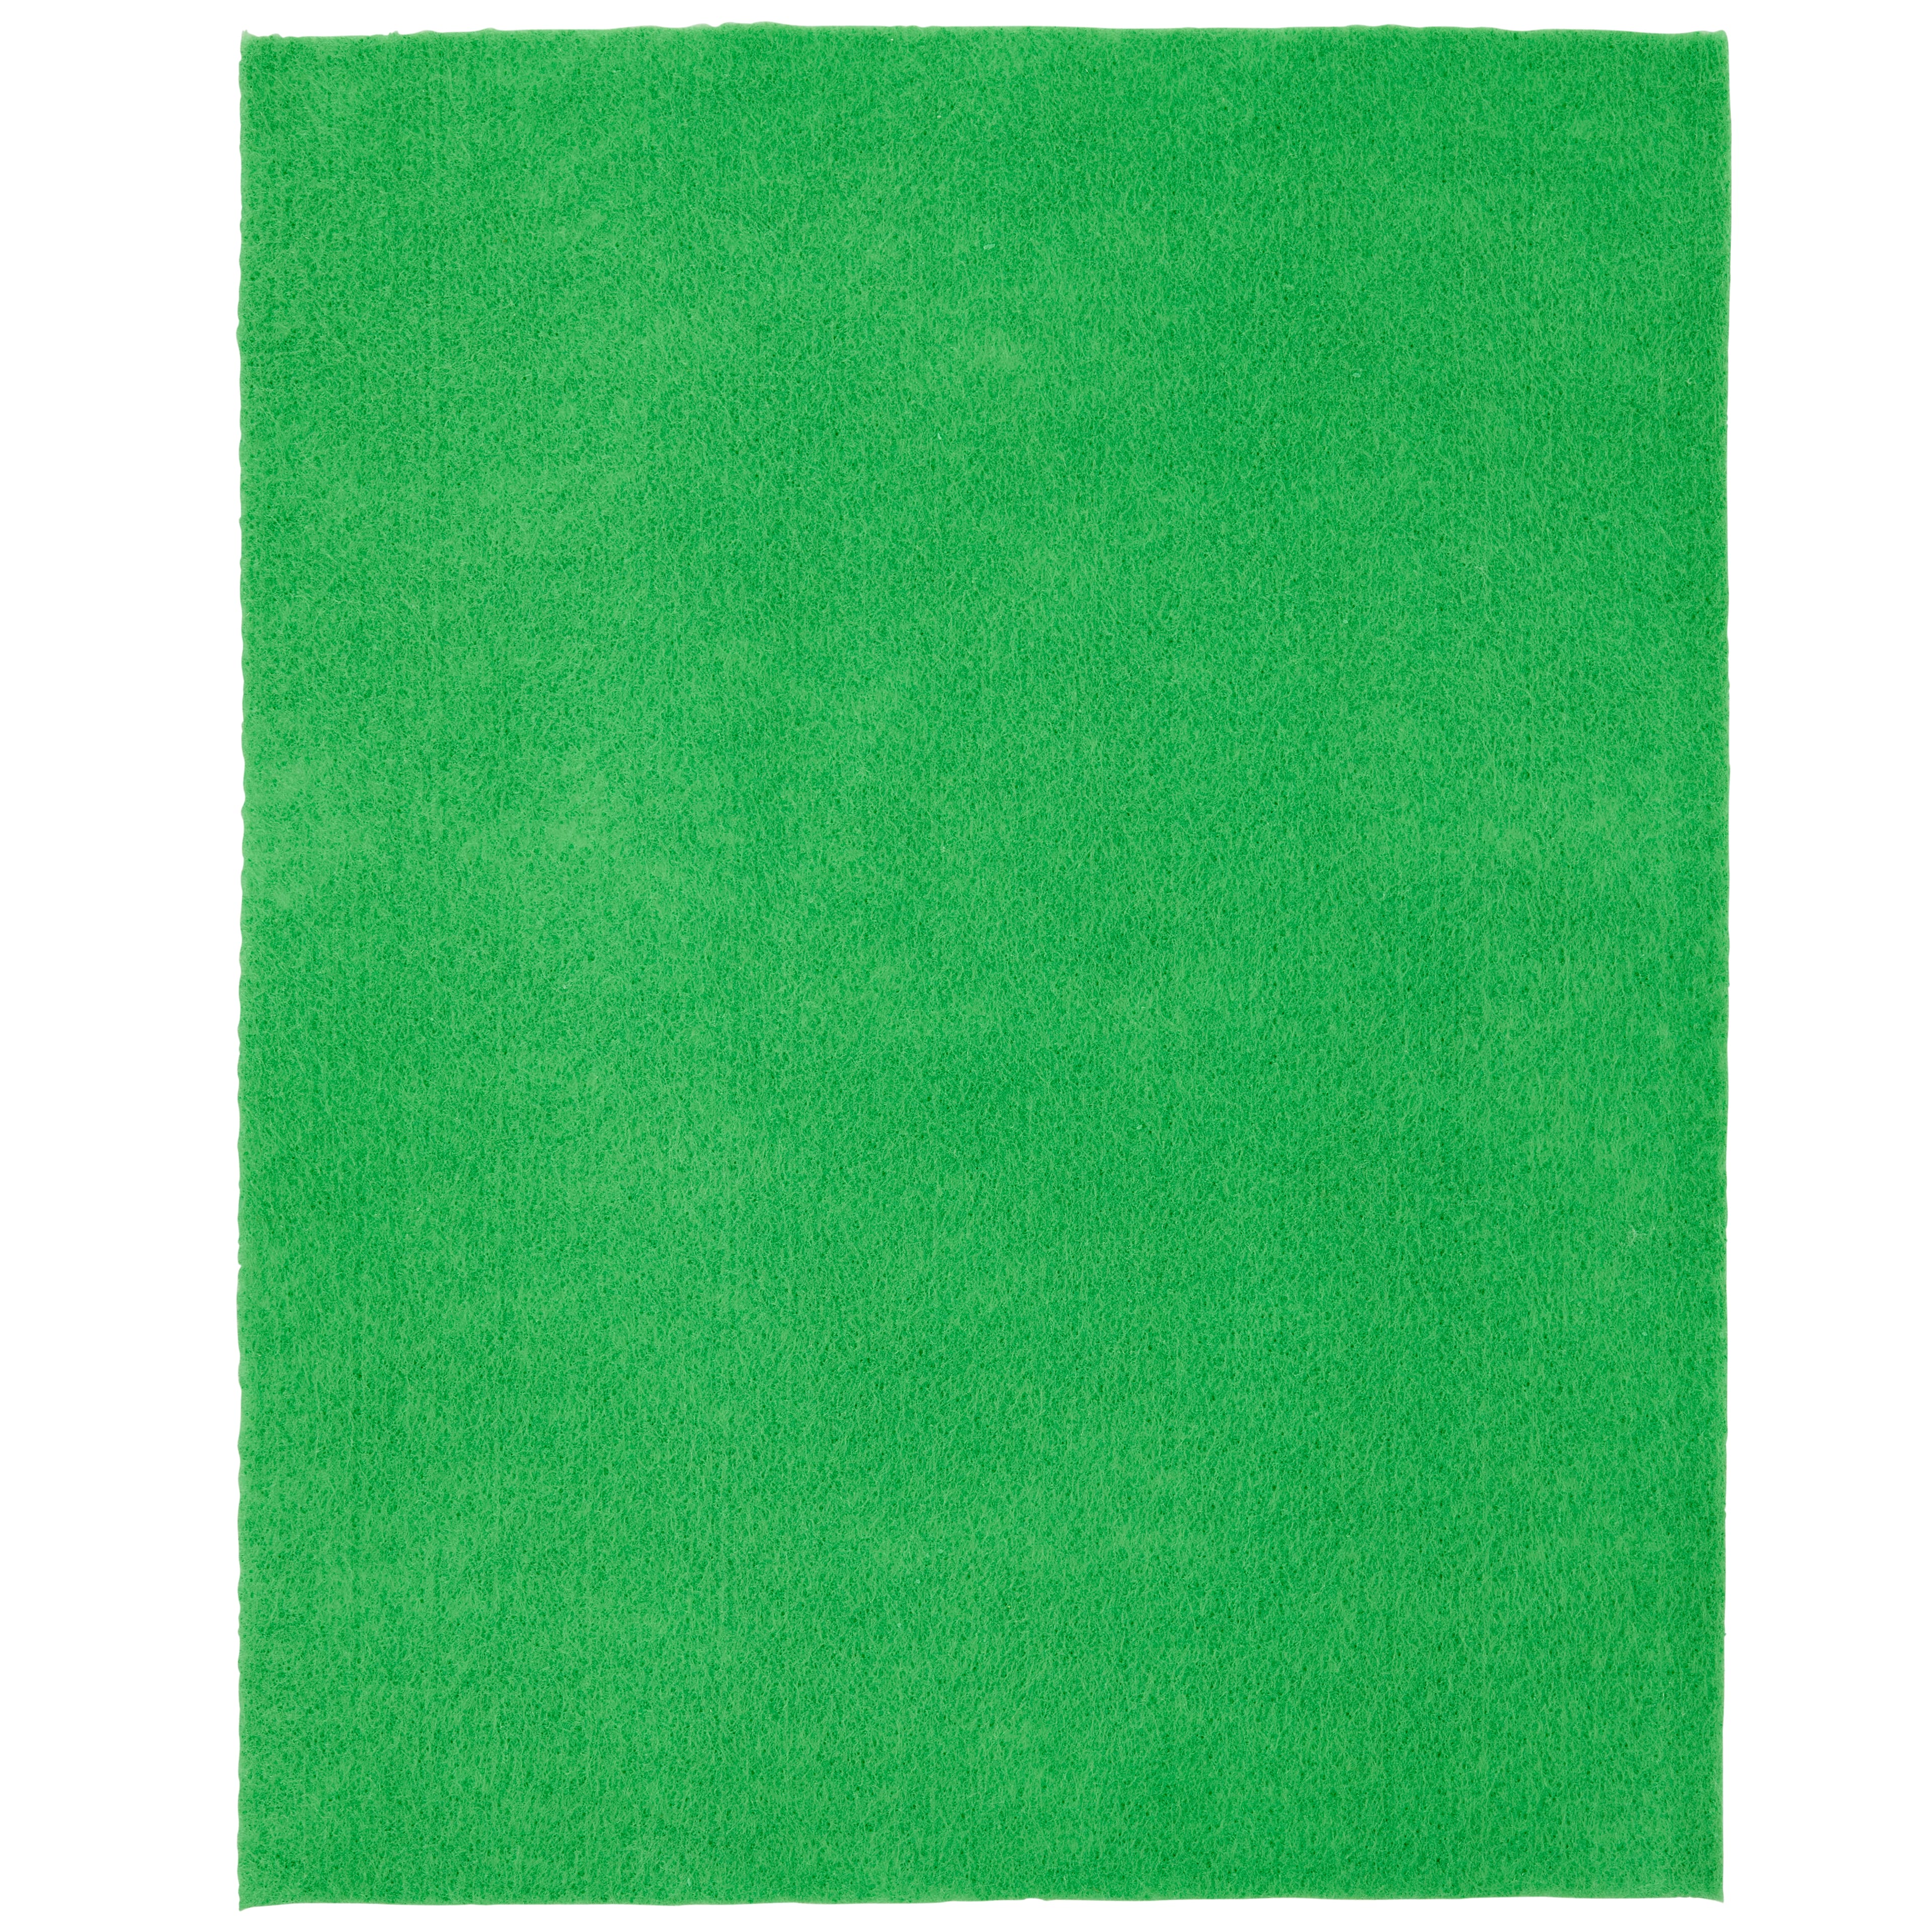 9 x 12 Inch Neon Green Felt Square Sheet 1 Piece